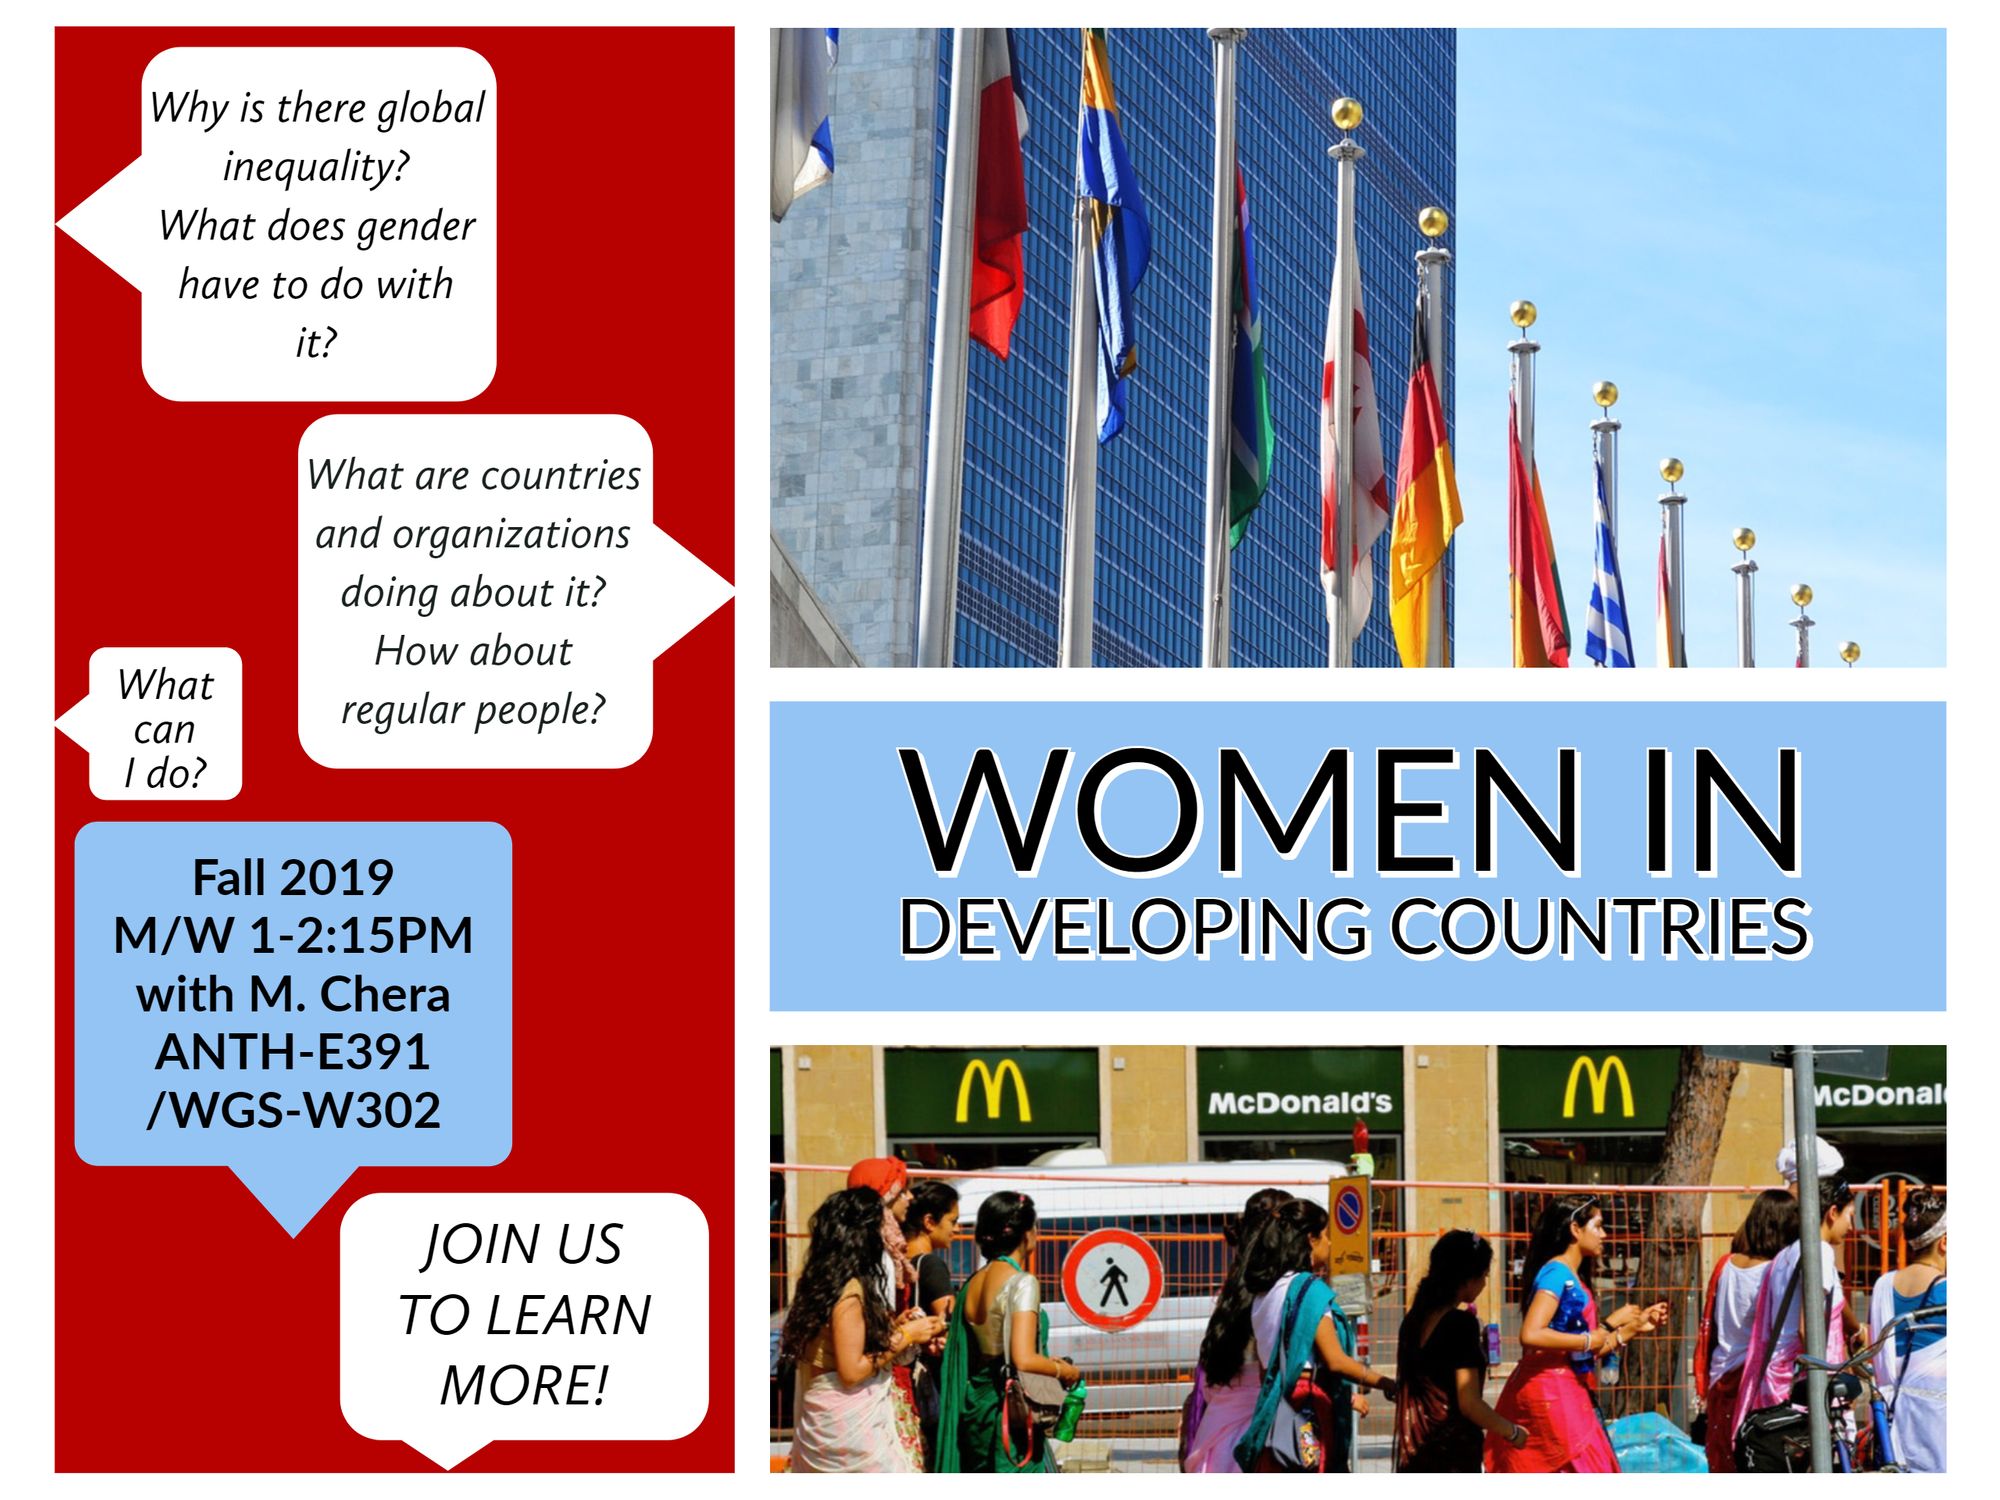 Promotional Slide for Gender and Development Course